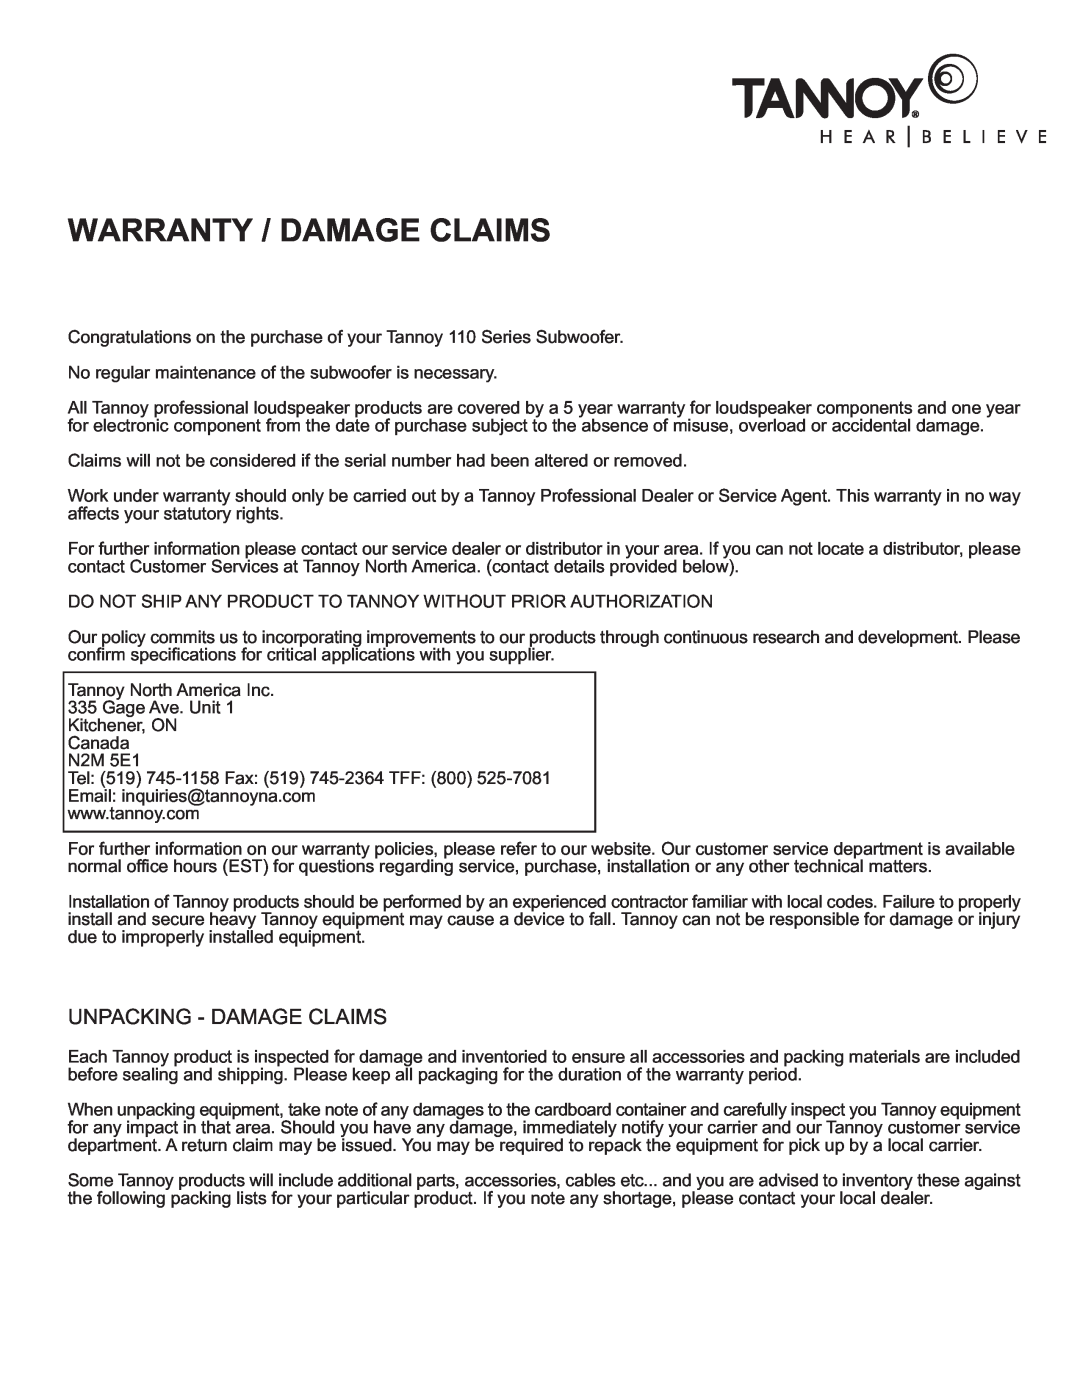 TOA Electronics 110SR owner manual Warranty / Damage Claims, Unpacking - Damage Claims 